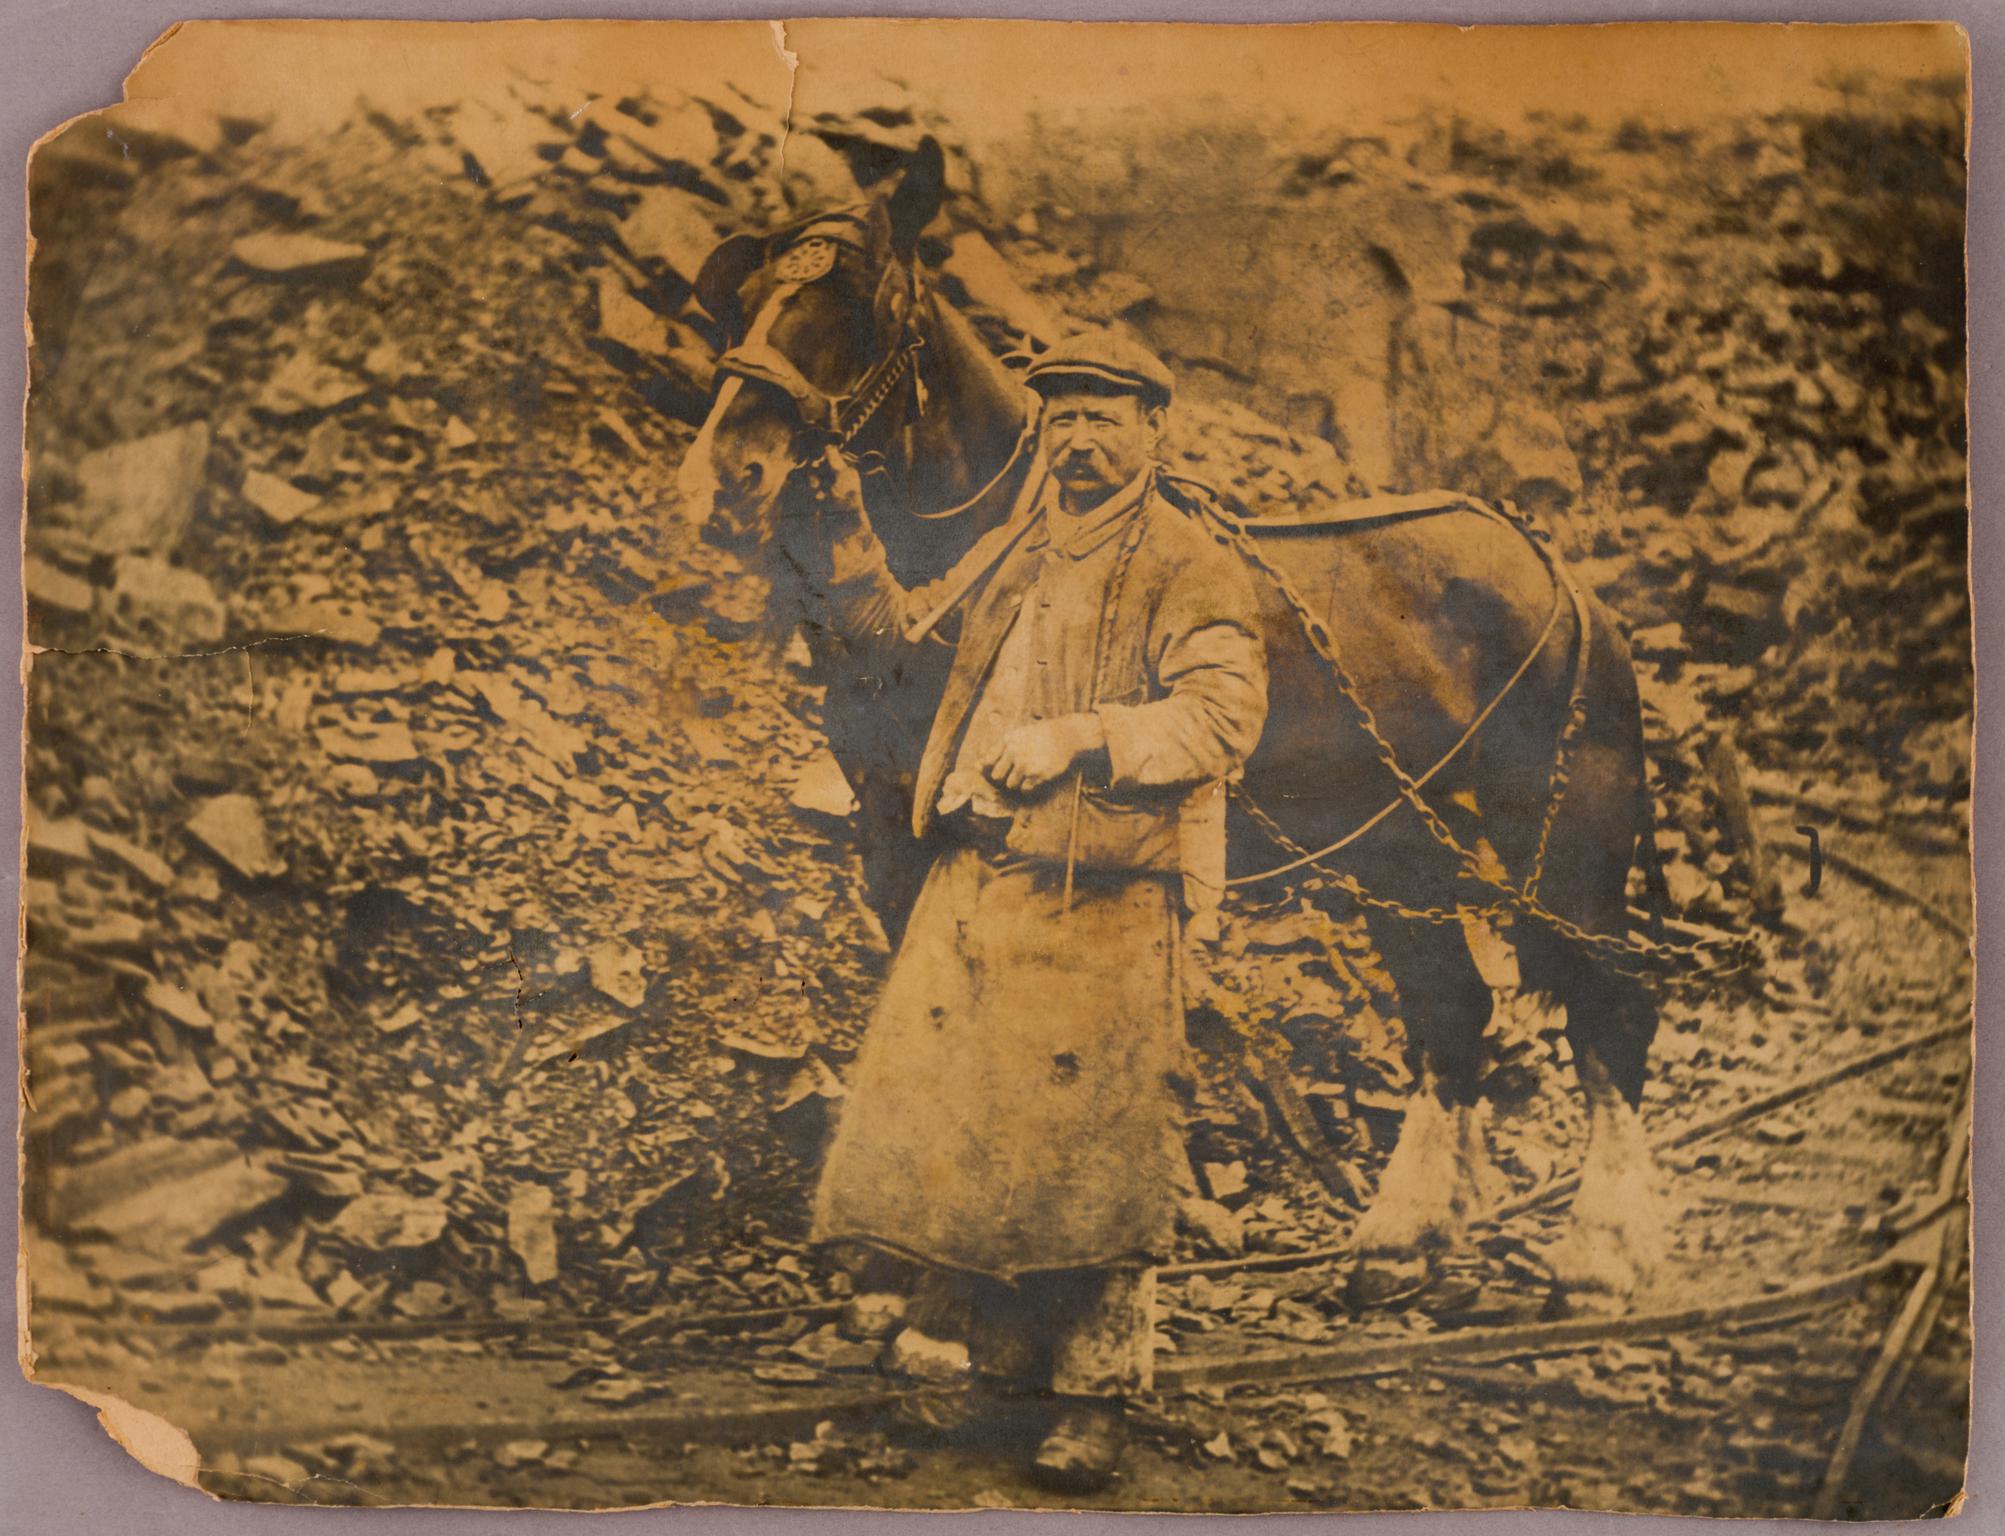 Blacksmith with horse, photograph